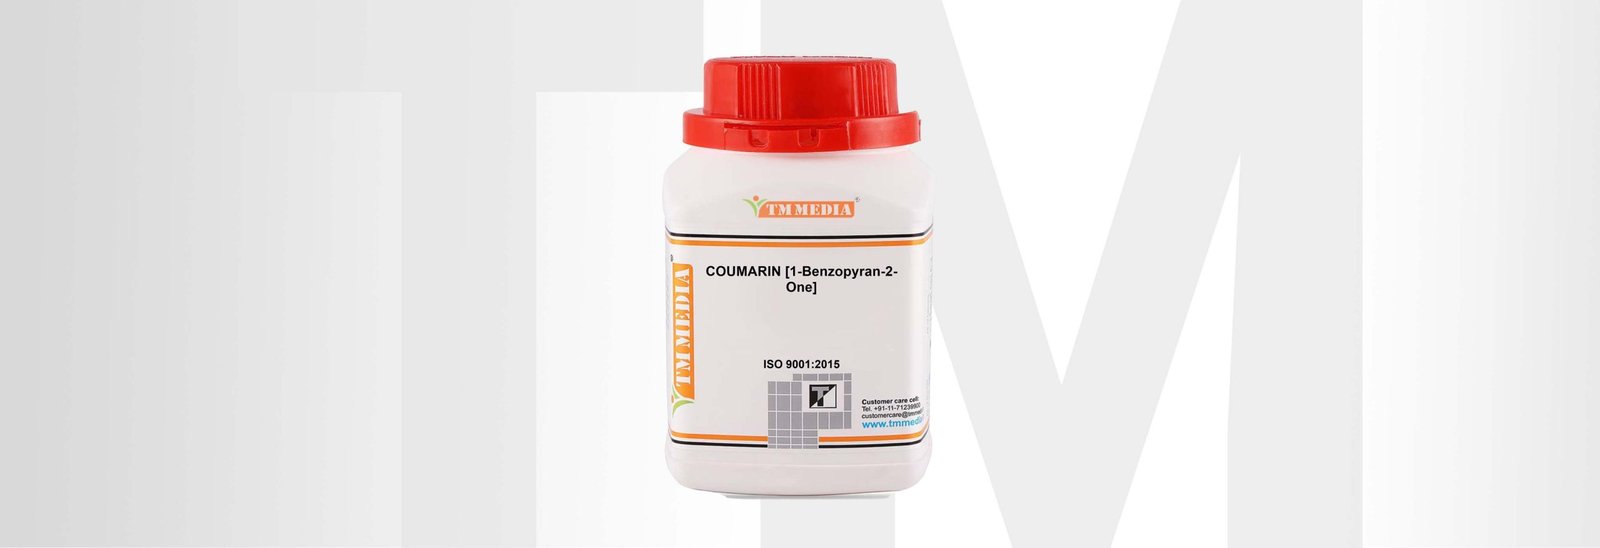 COUMARIN [1-Benzopyran-2-One] by TM media